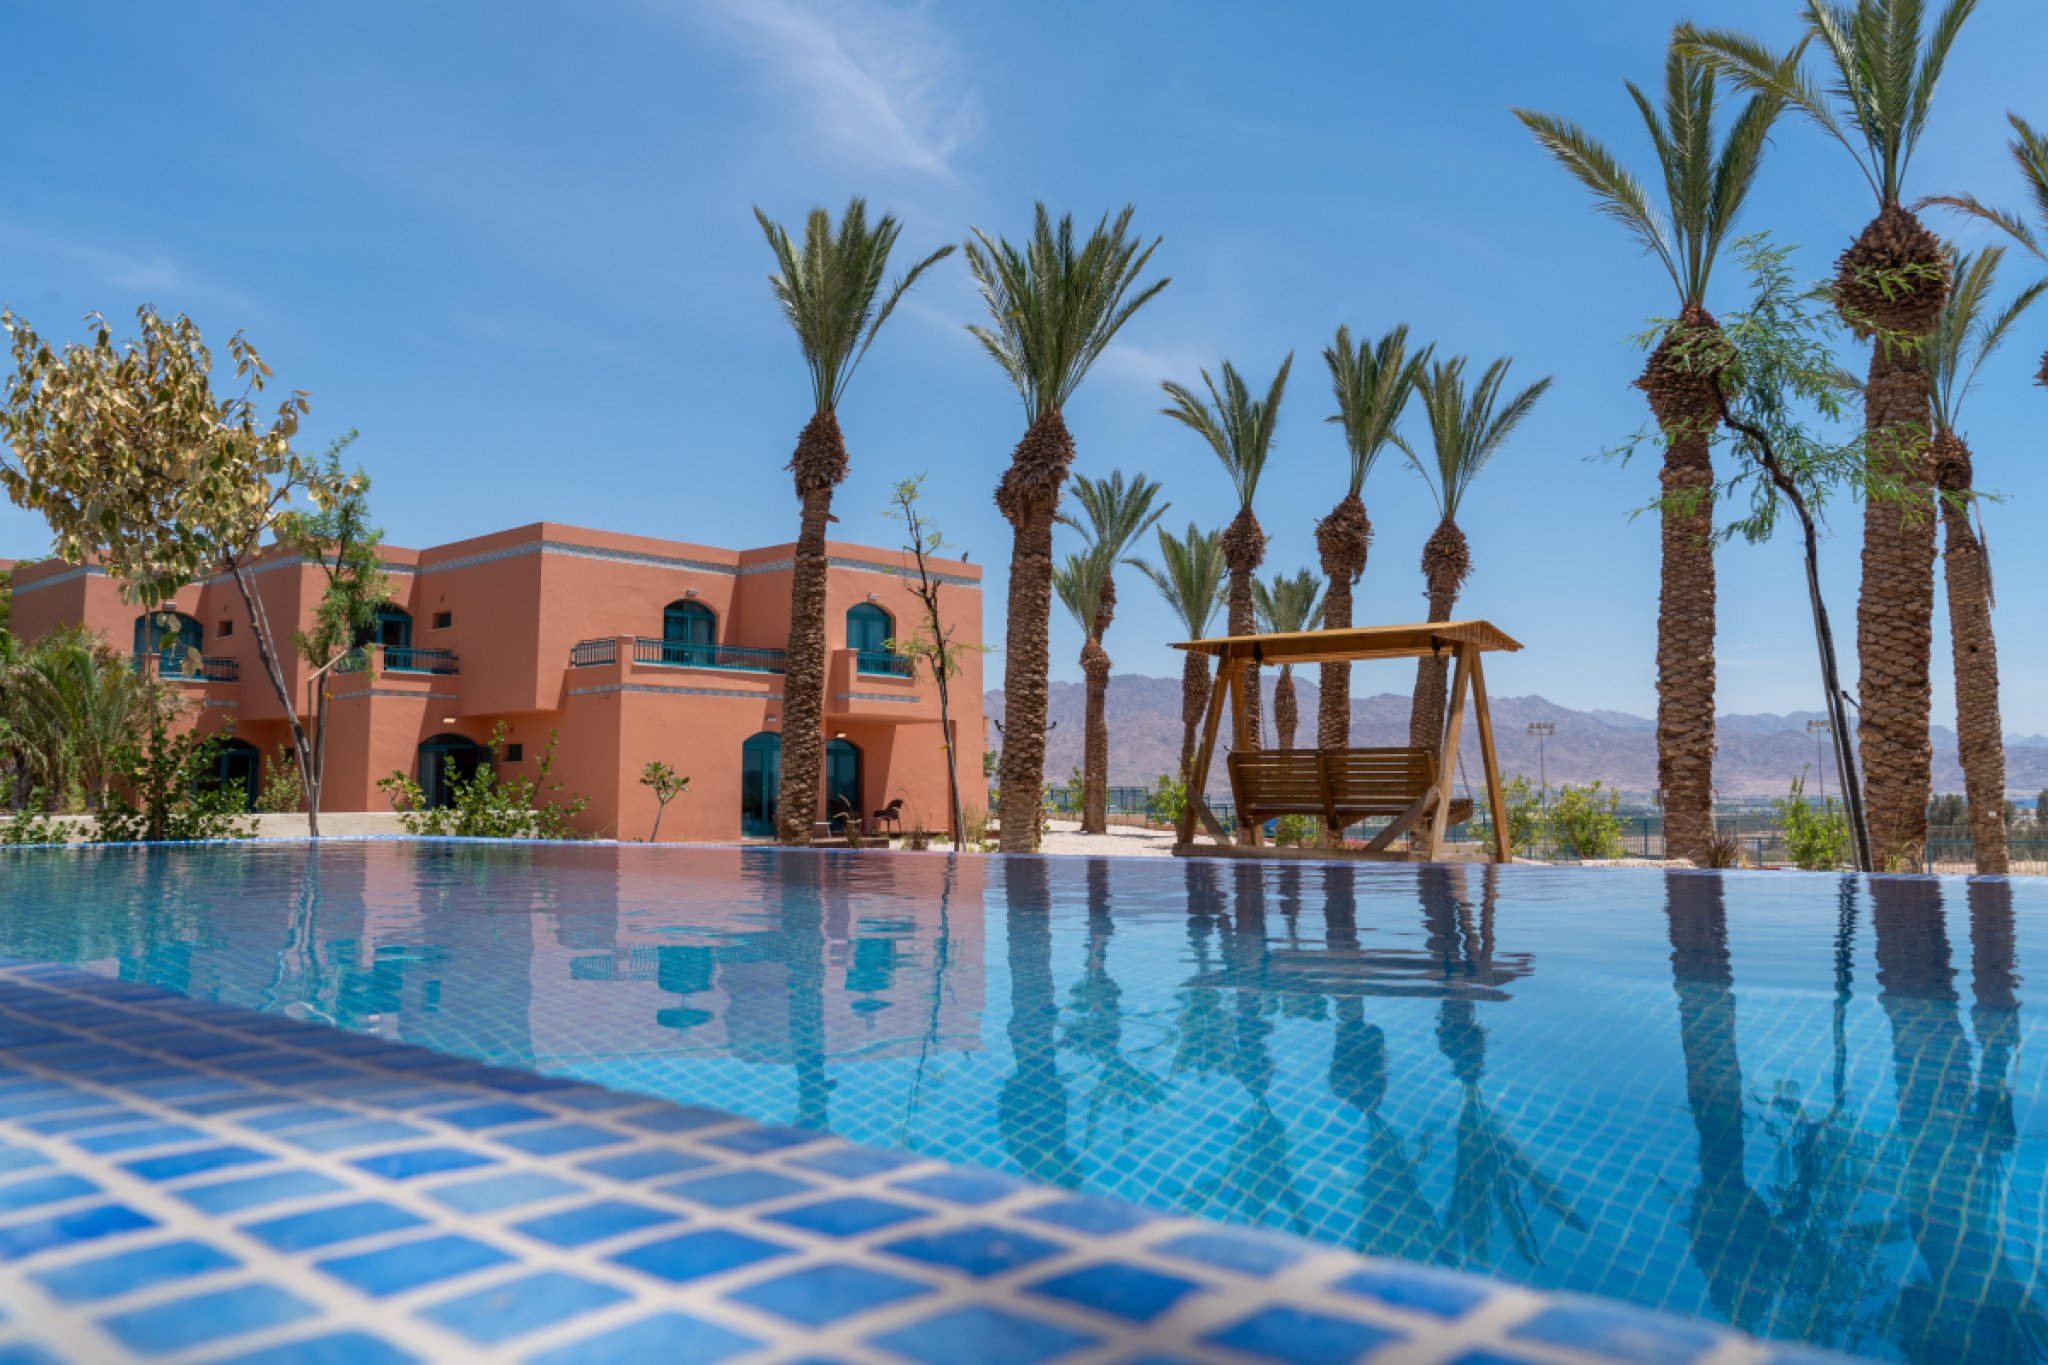 U Splash Resort Eilat - Rooms with private pool